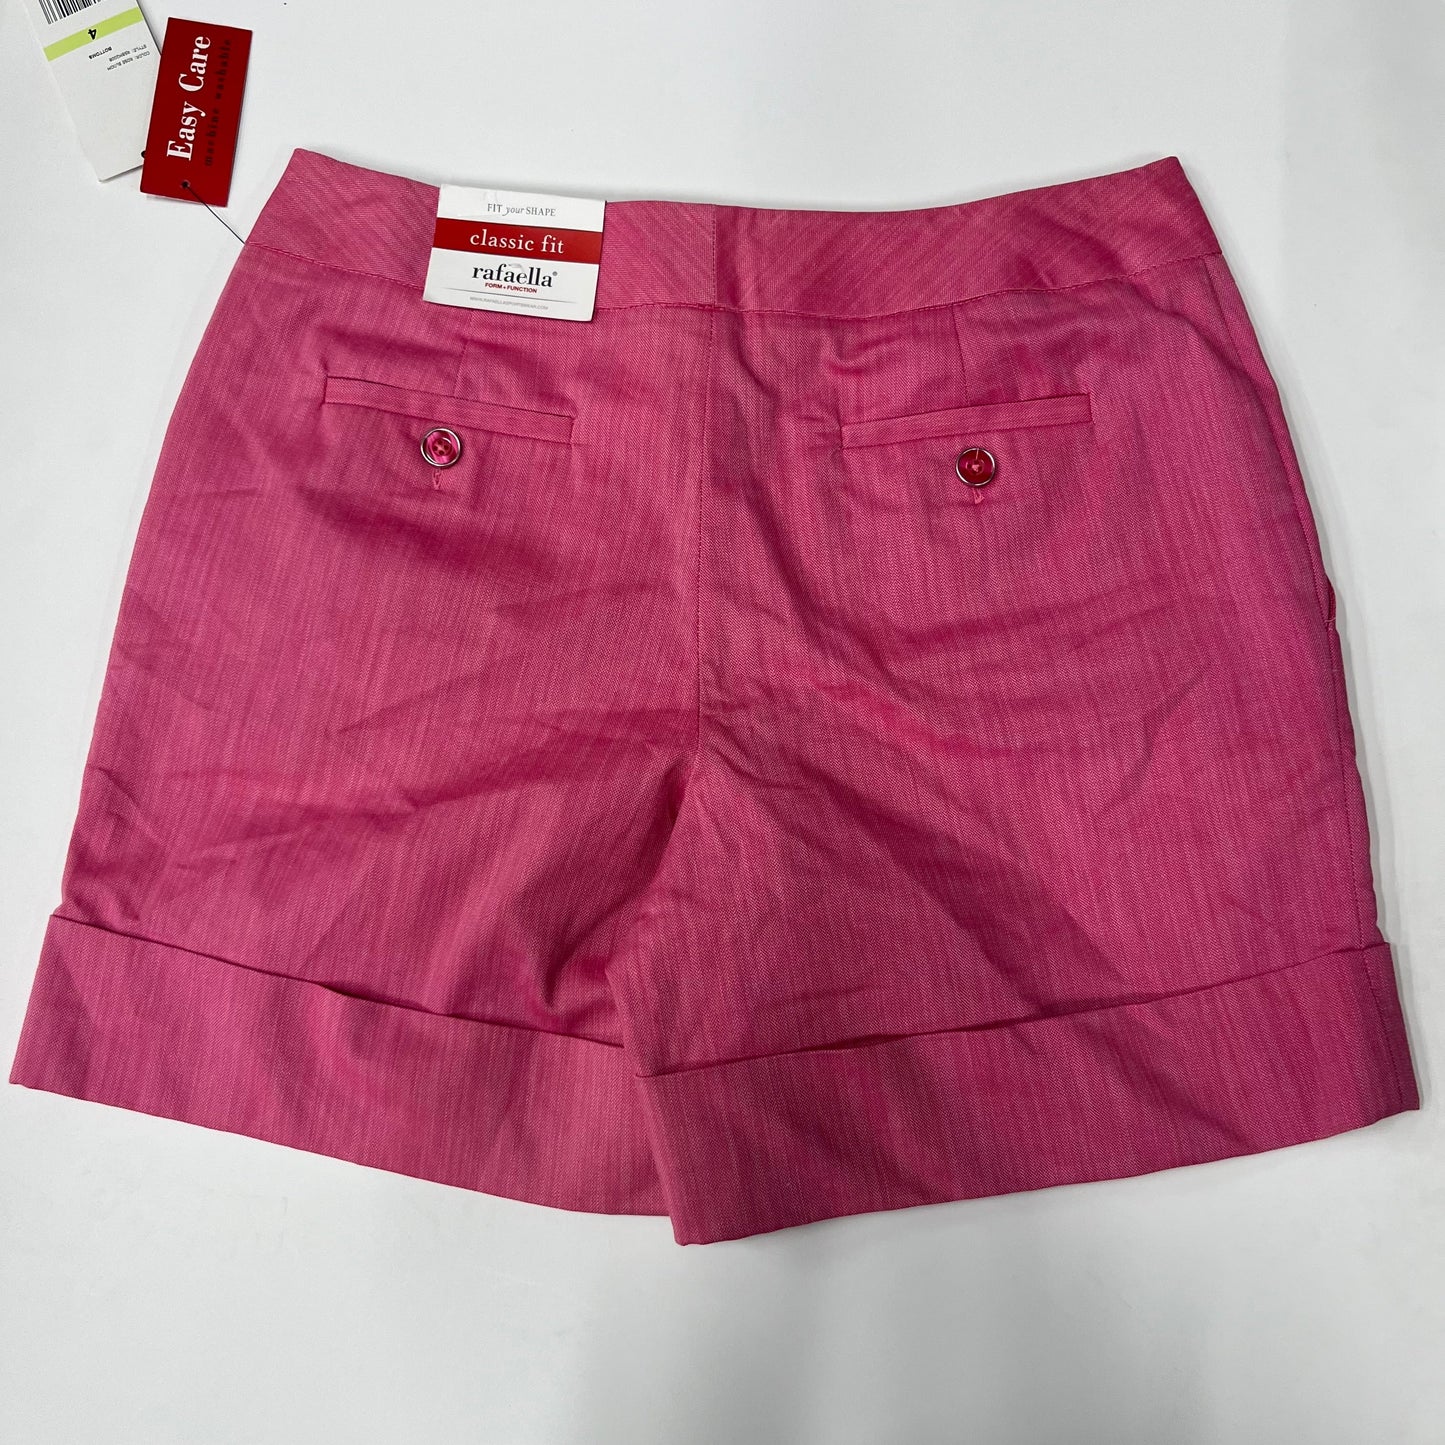 Shorts By Rafaella NWT  Size: 4